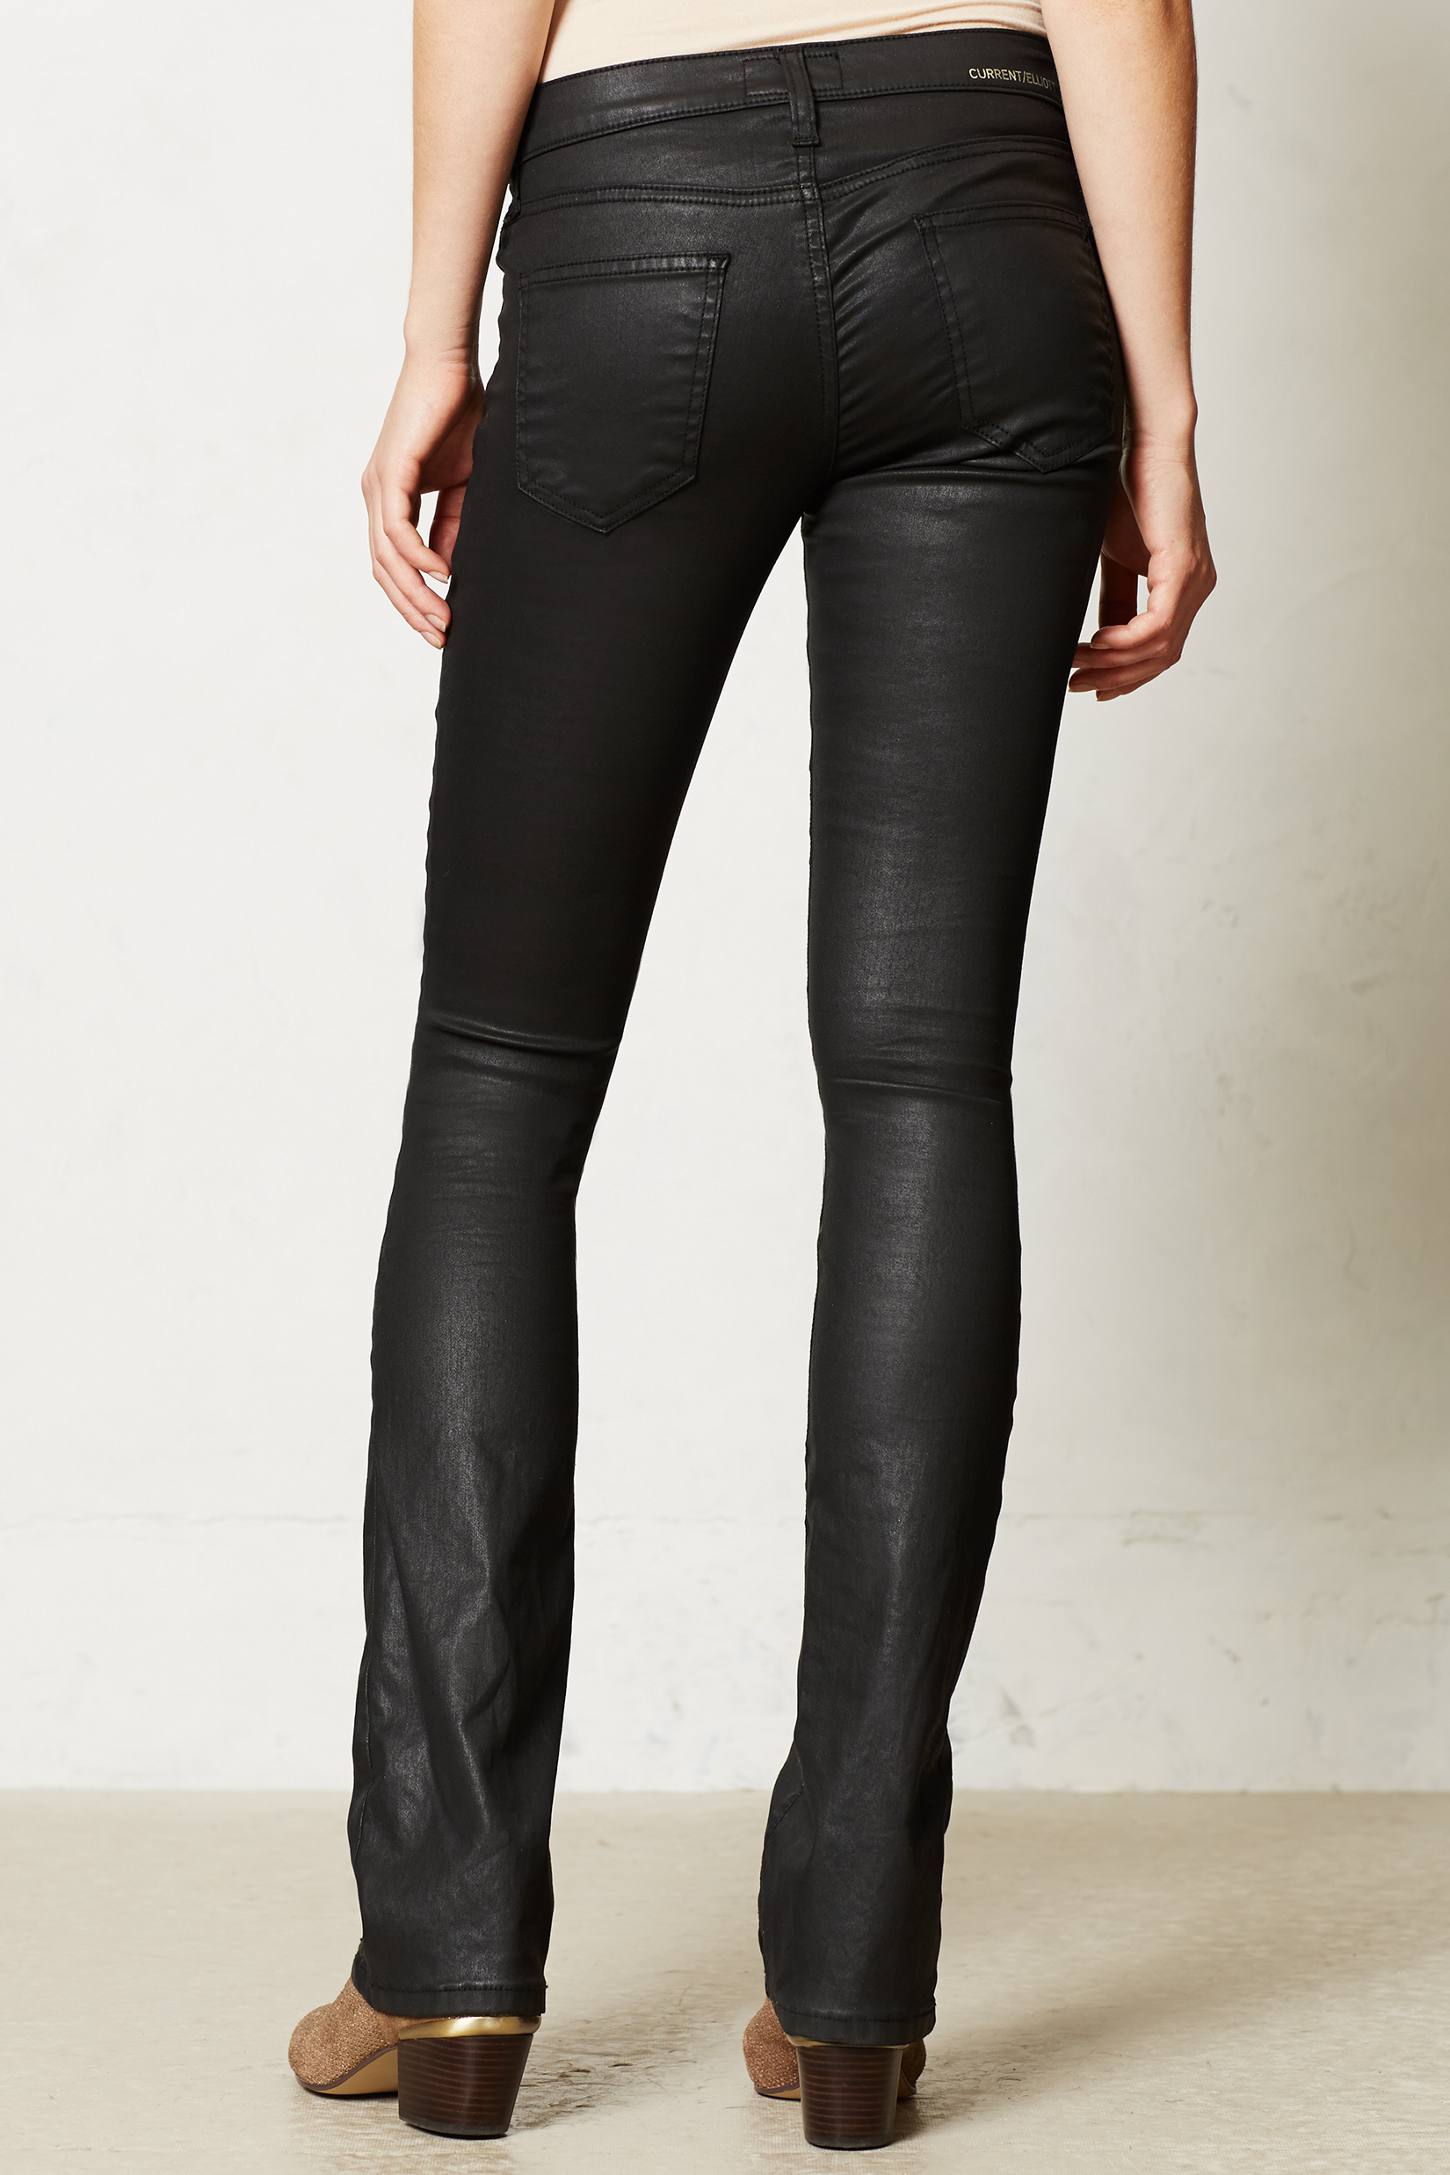 Current/elliott Coated Slim Bootcut Jeans in Black